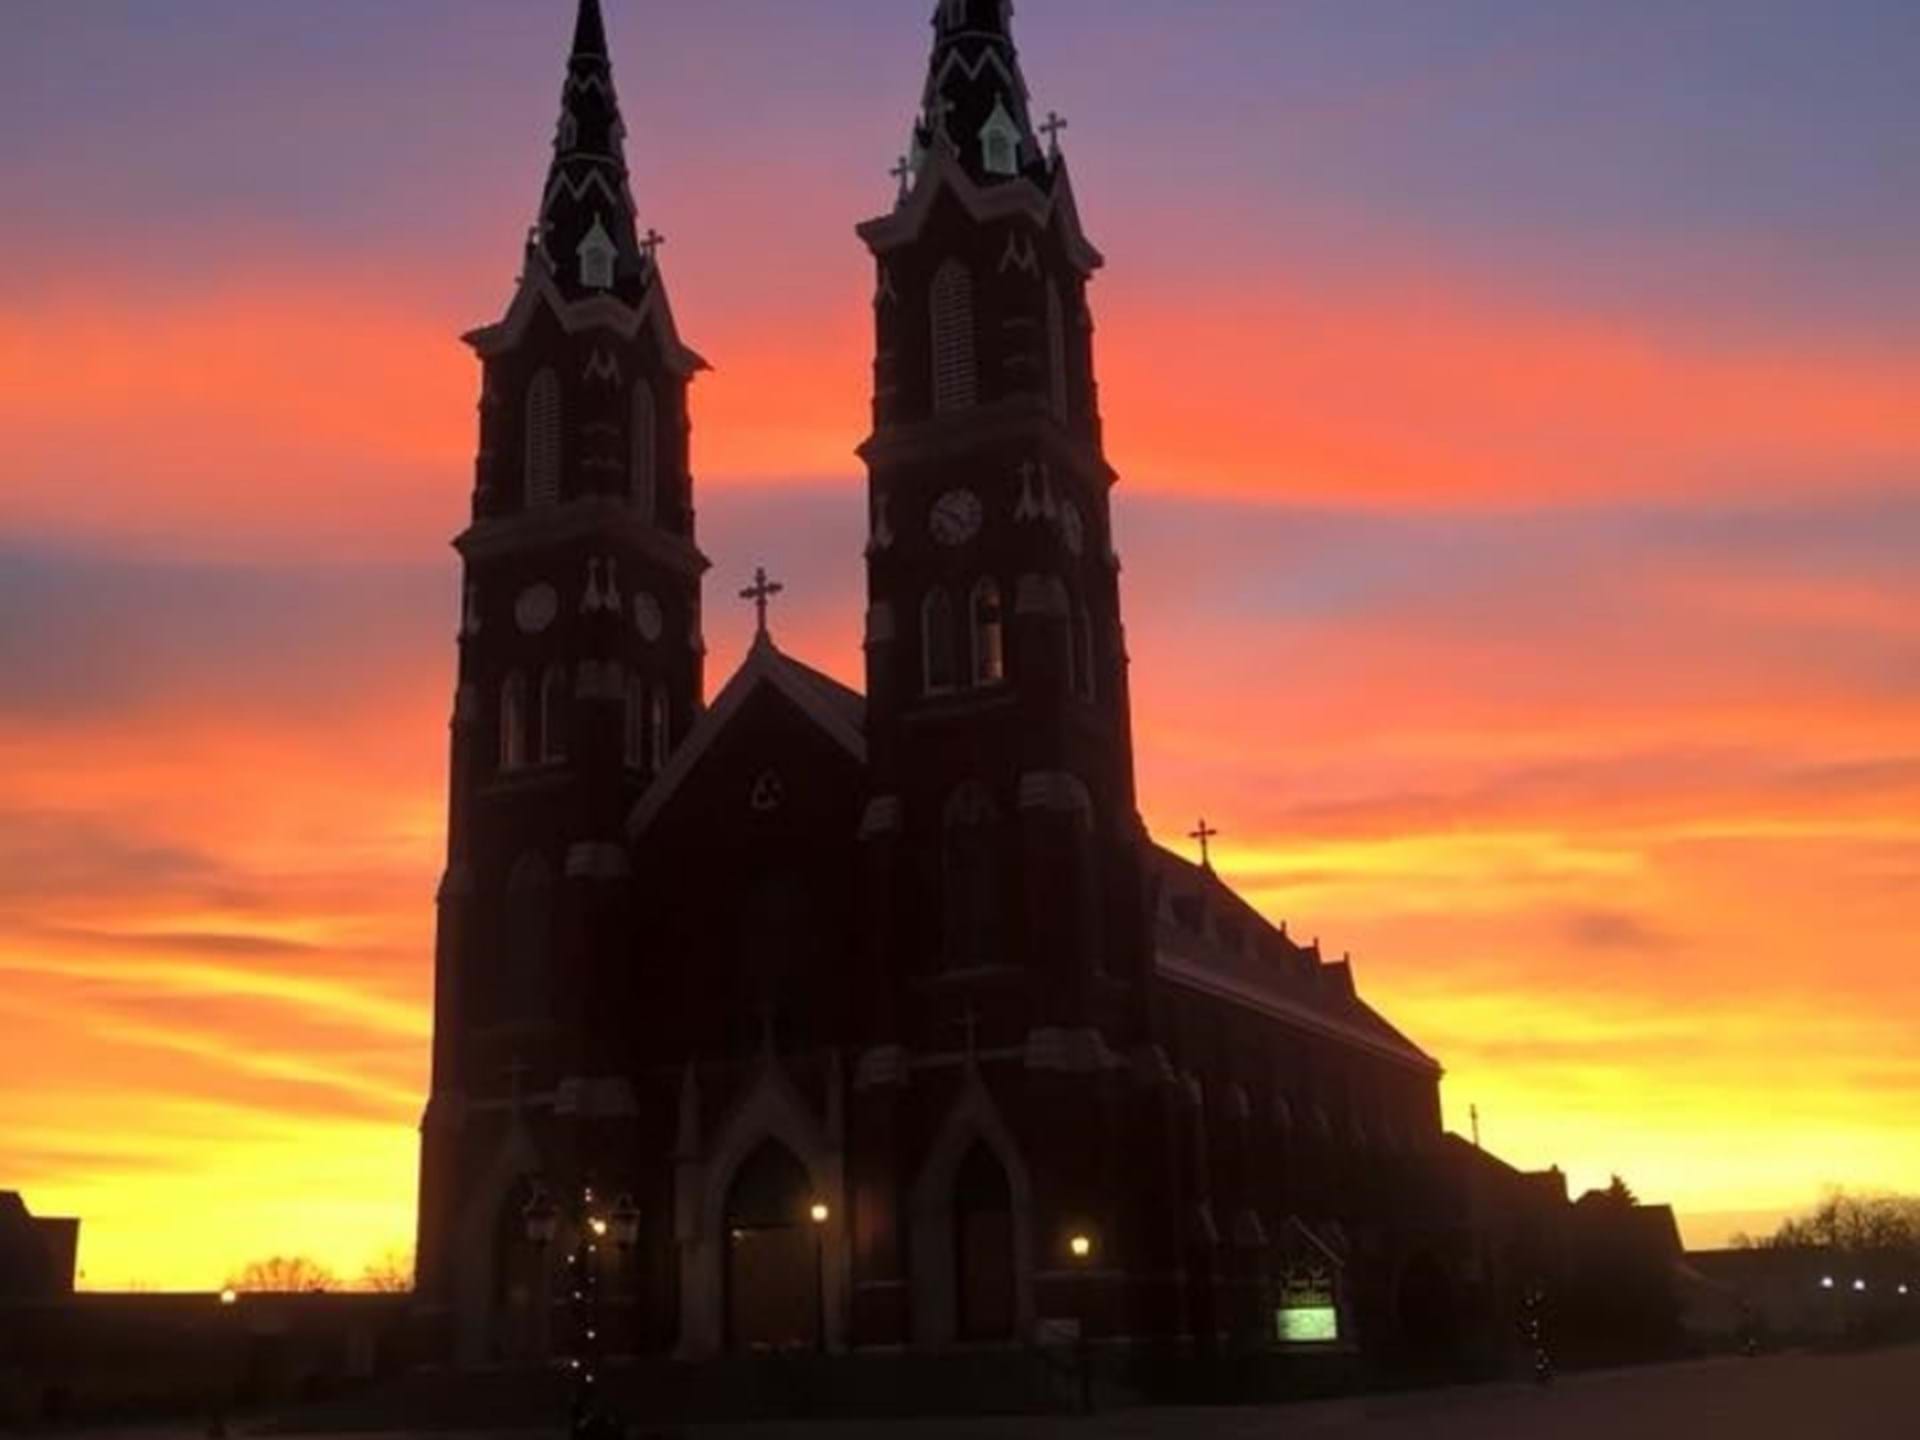 Basilica of St. Francis Xavier at sunset